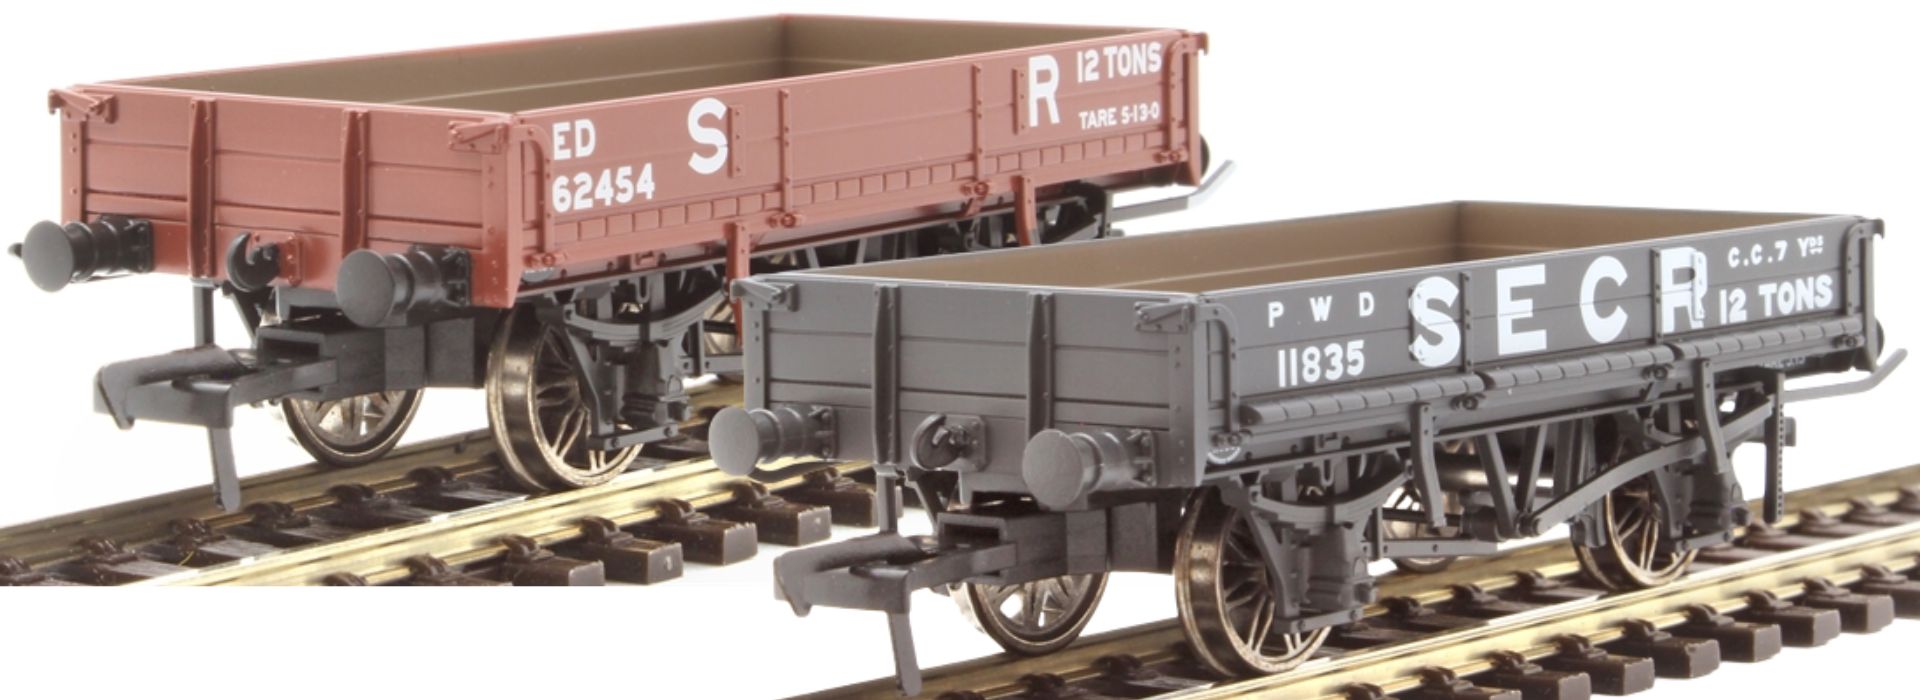 Rapido Trains UK OO Gauge (1:76 Scale) 12 ton Ballast Wagon SECR